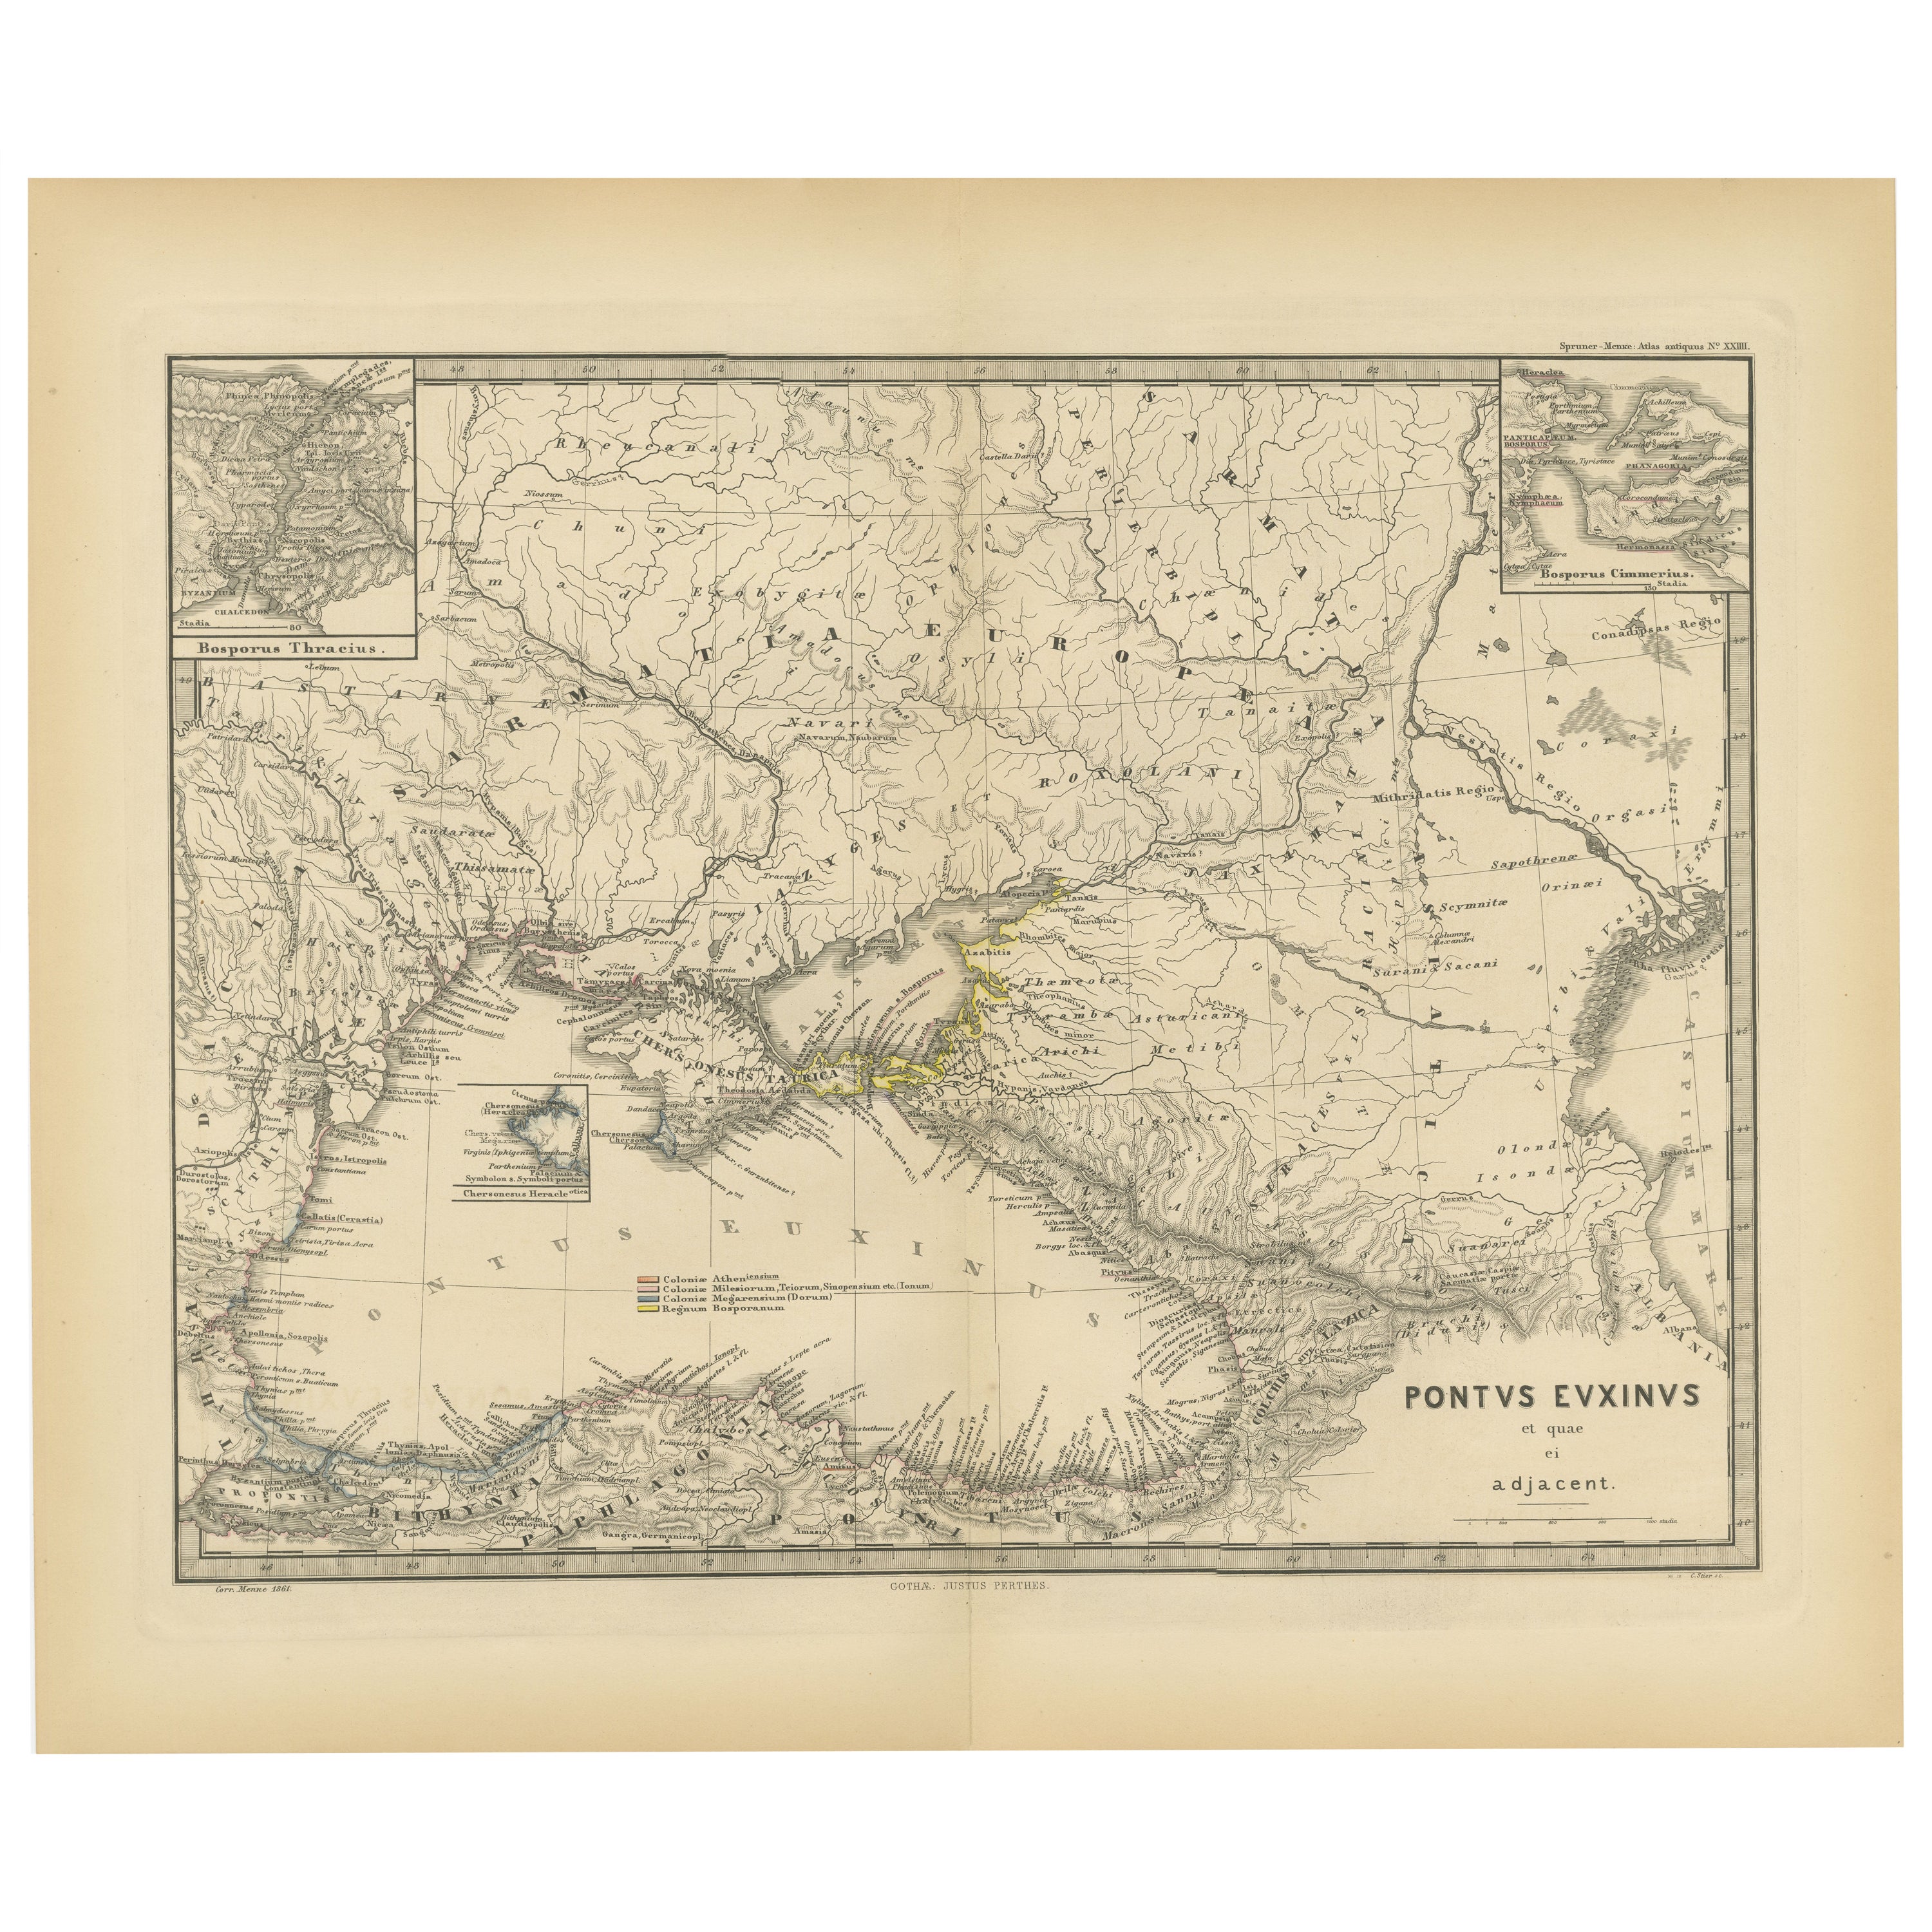 Black Sea in Antiquity: Pontus Euxinus Map, Published in 1880